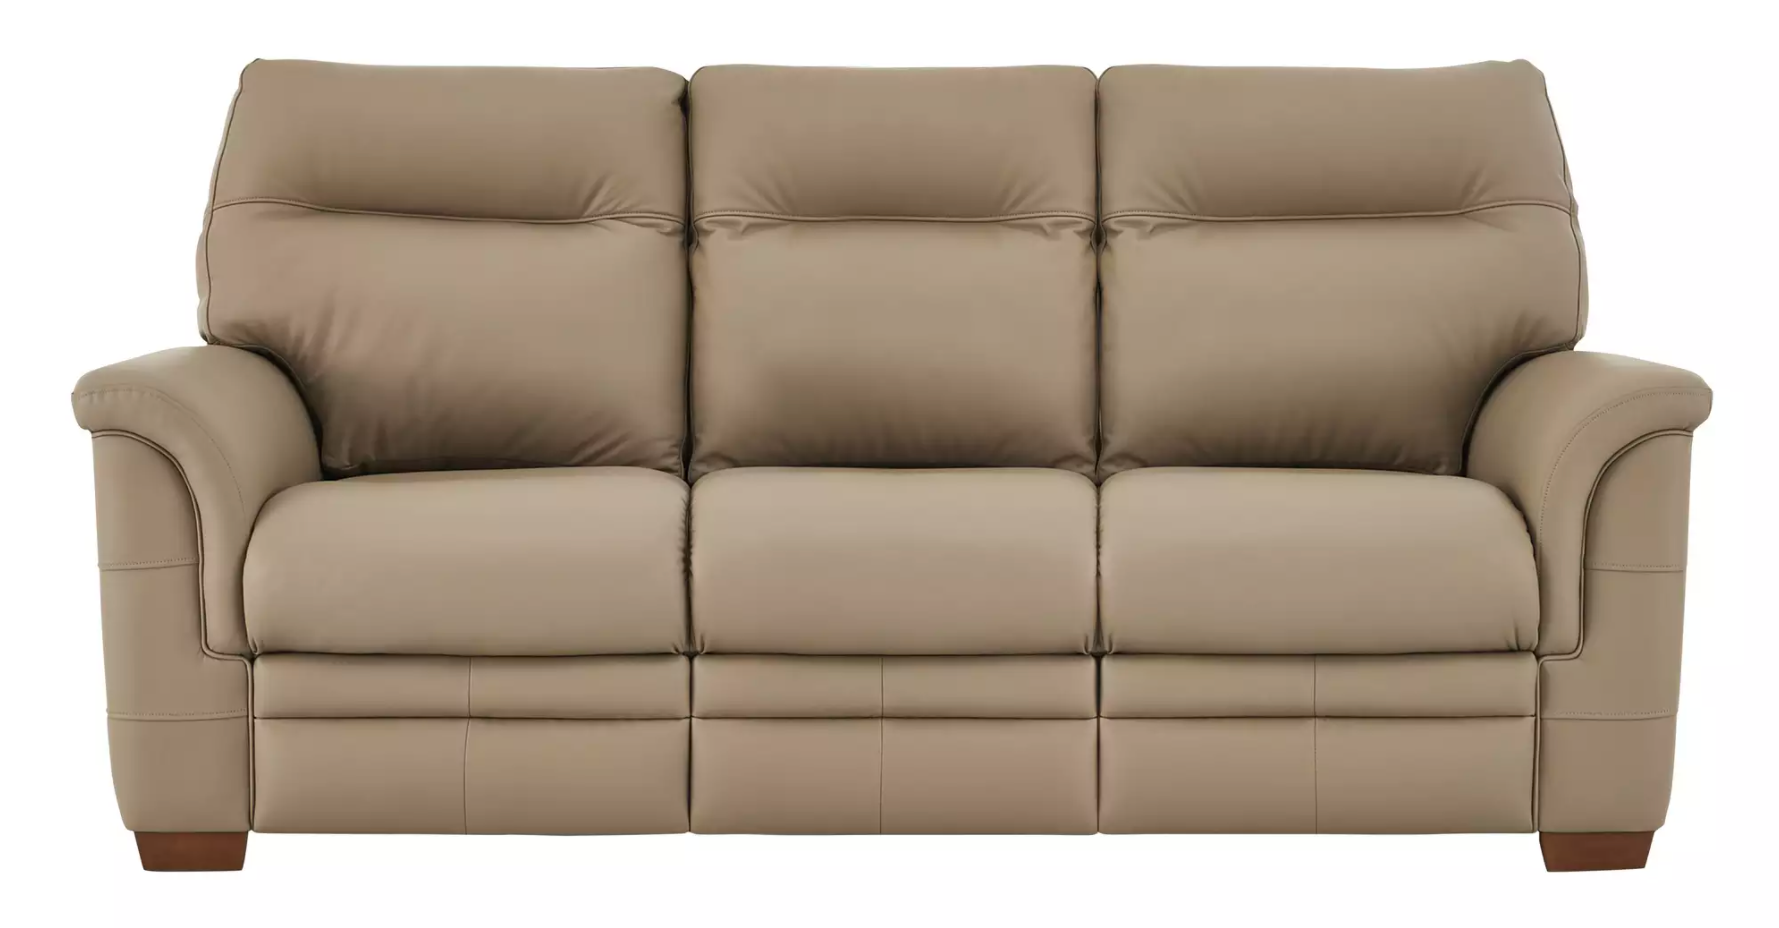 parker knoll hudson leather sofa